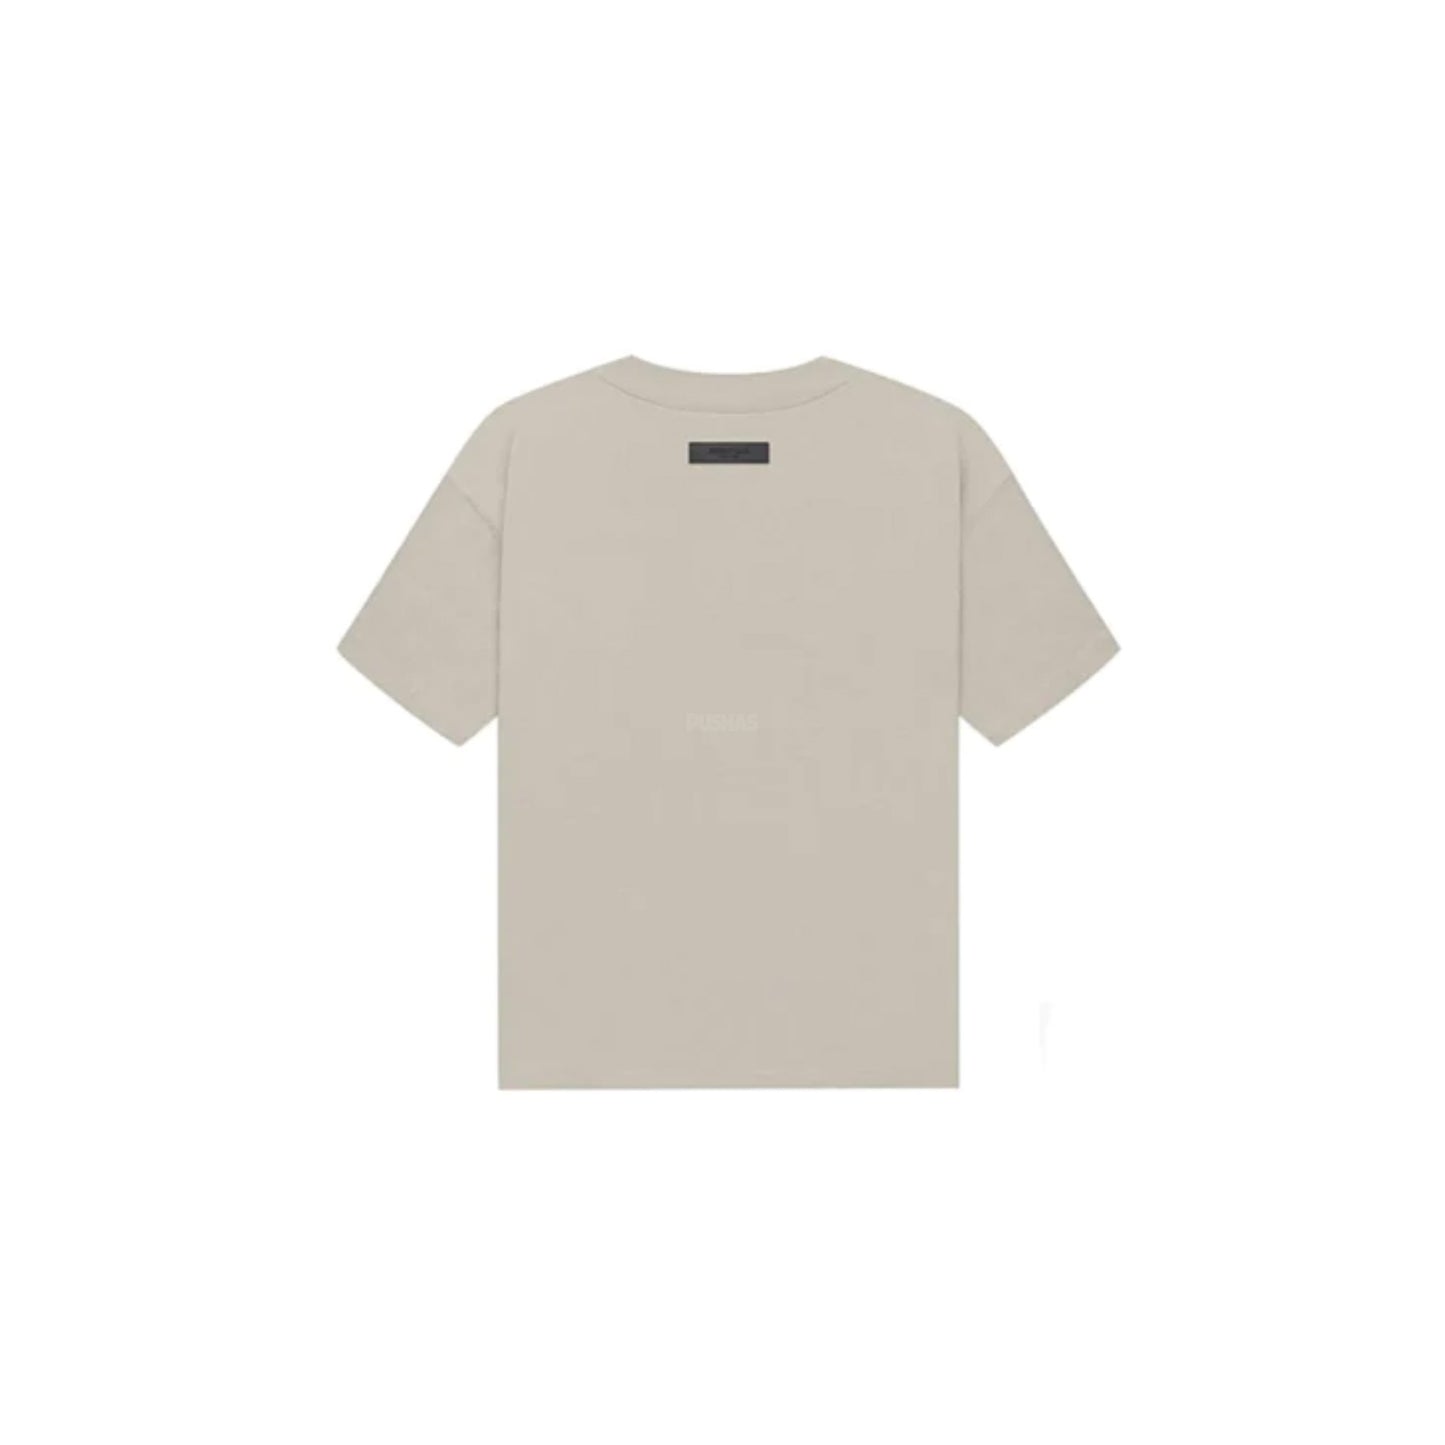 Essentials-T-Shirt-Smoke-FW22